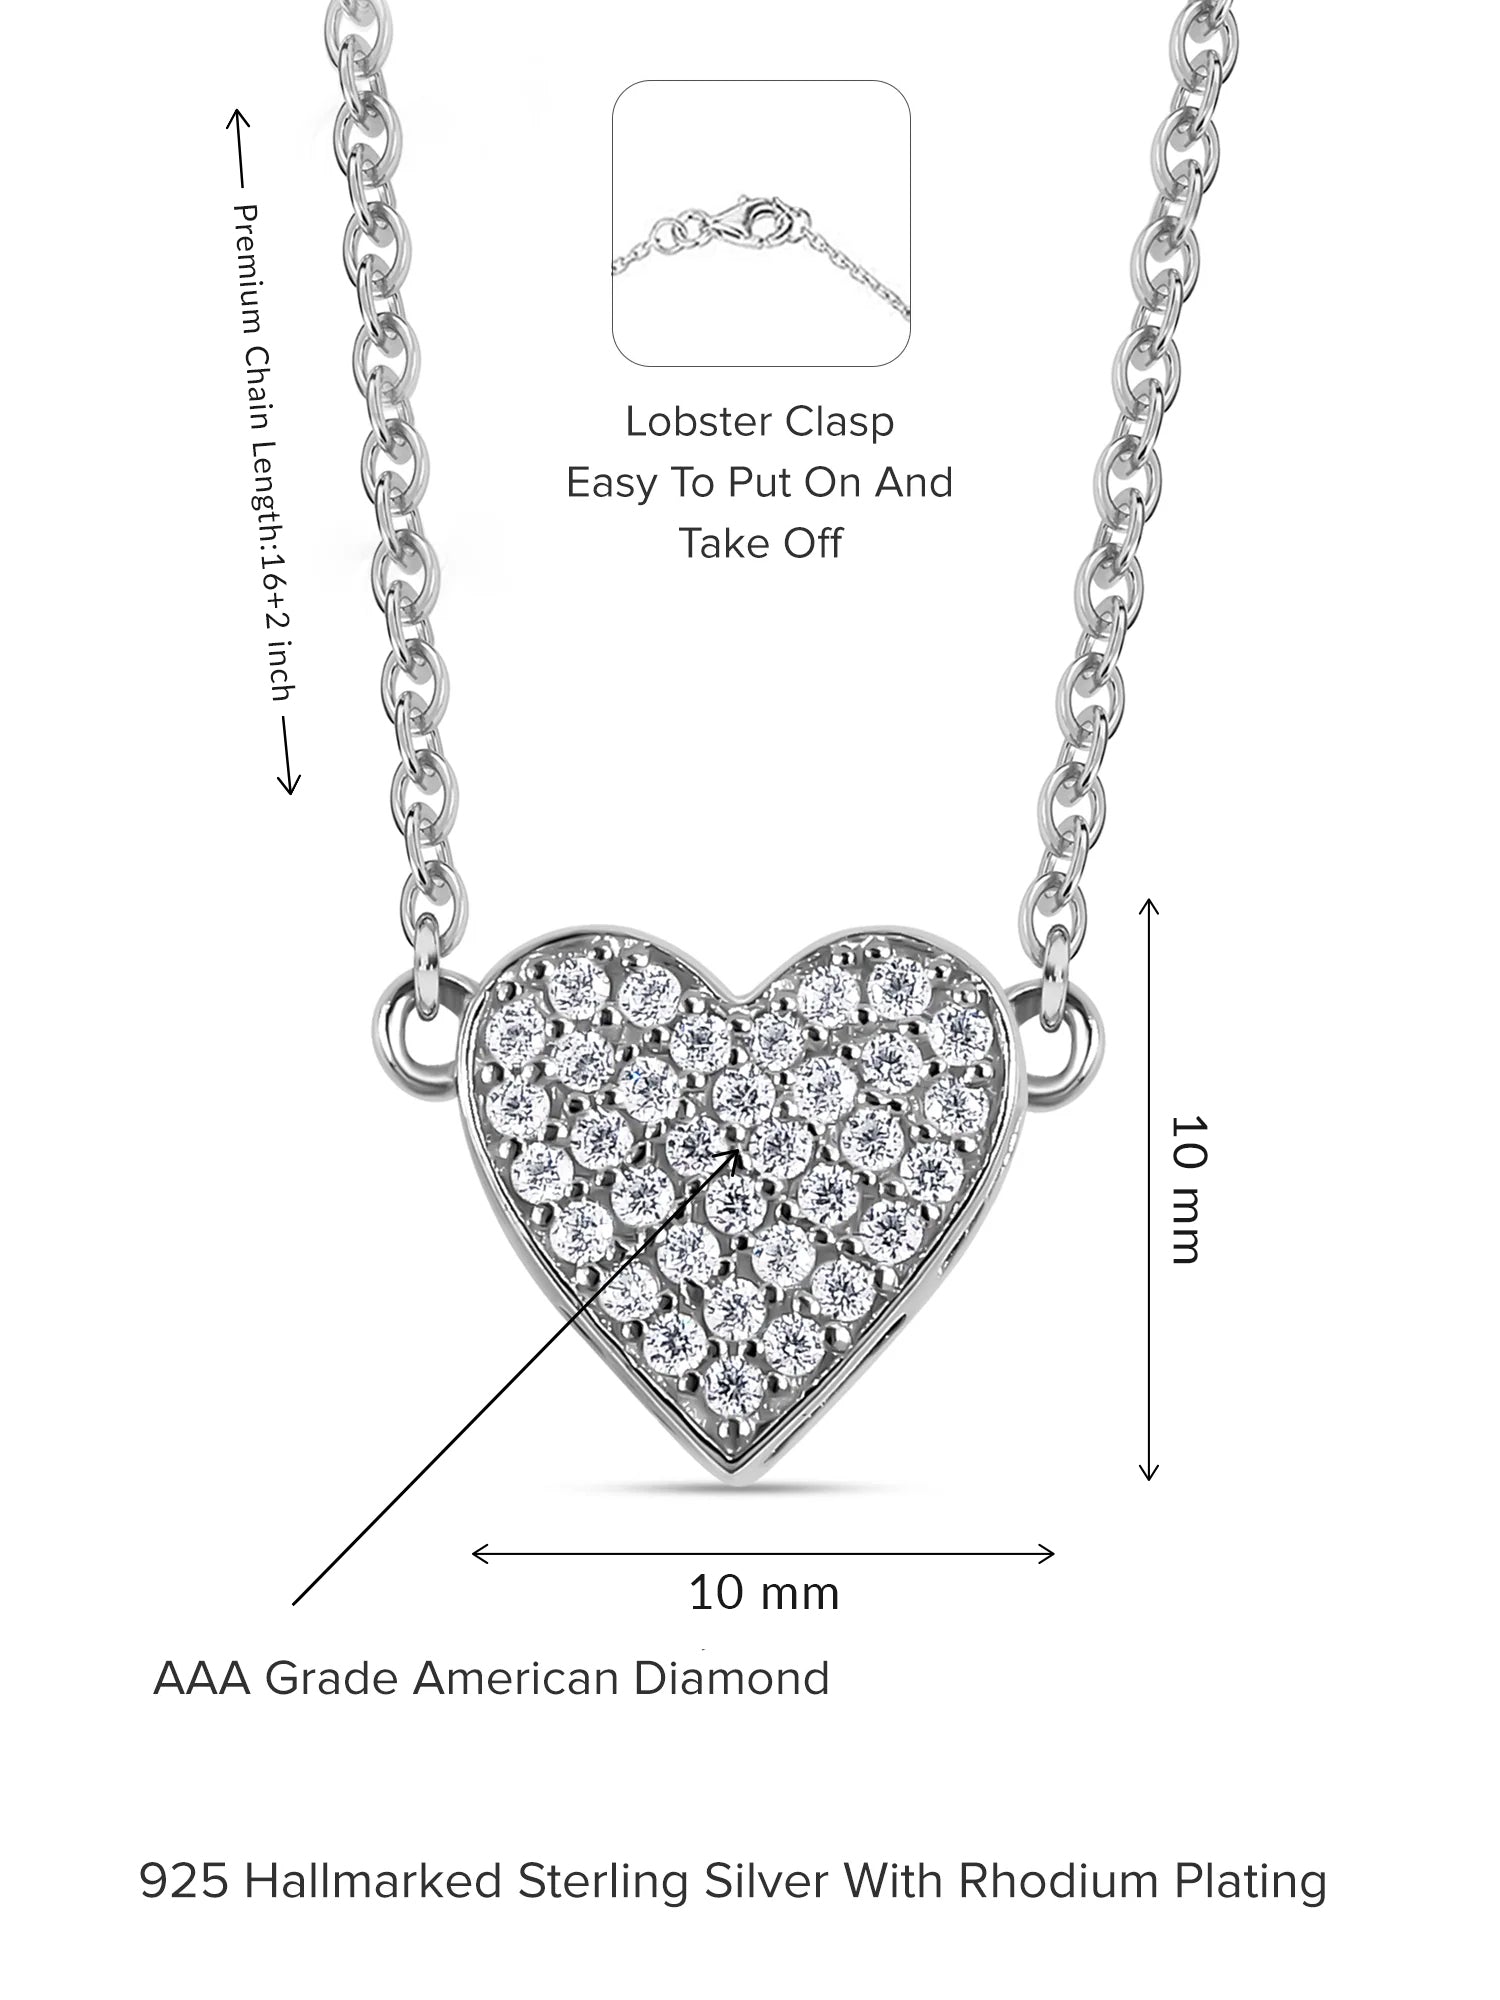 Diamond Look Heart Necklace In 925 Silver